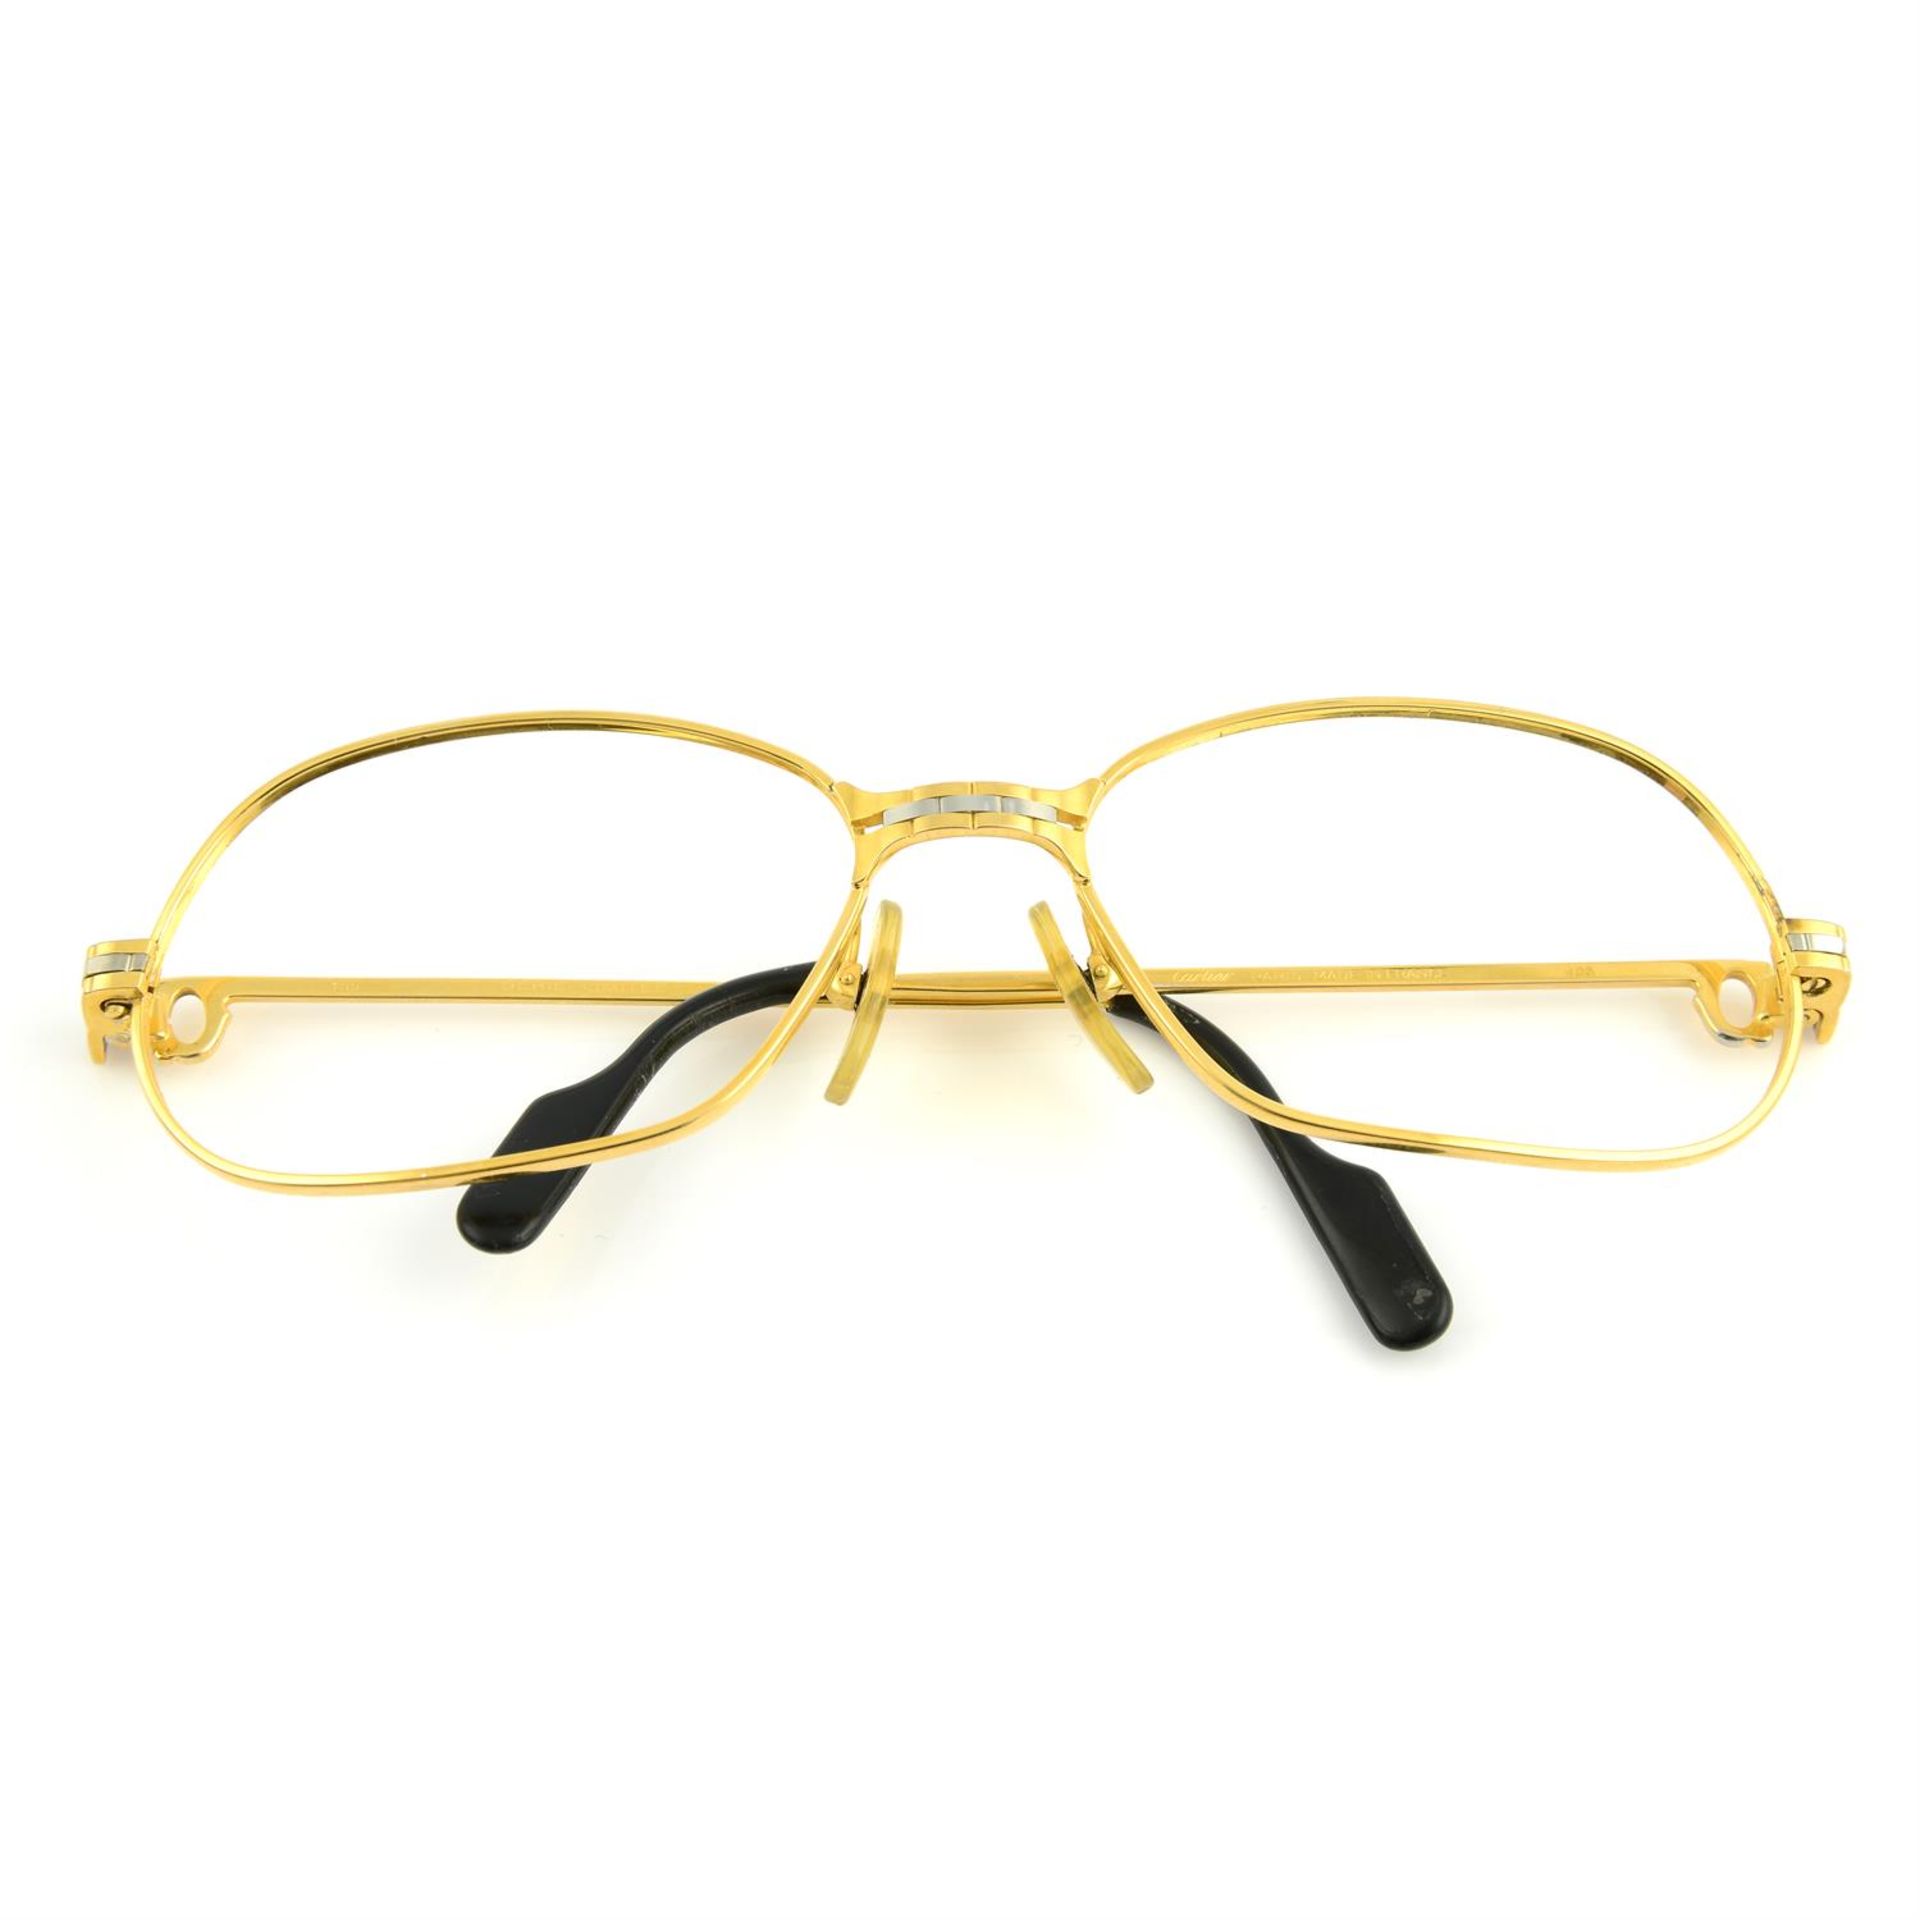 CARTIER - a pair of Panthère glasses frames.